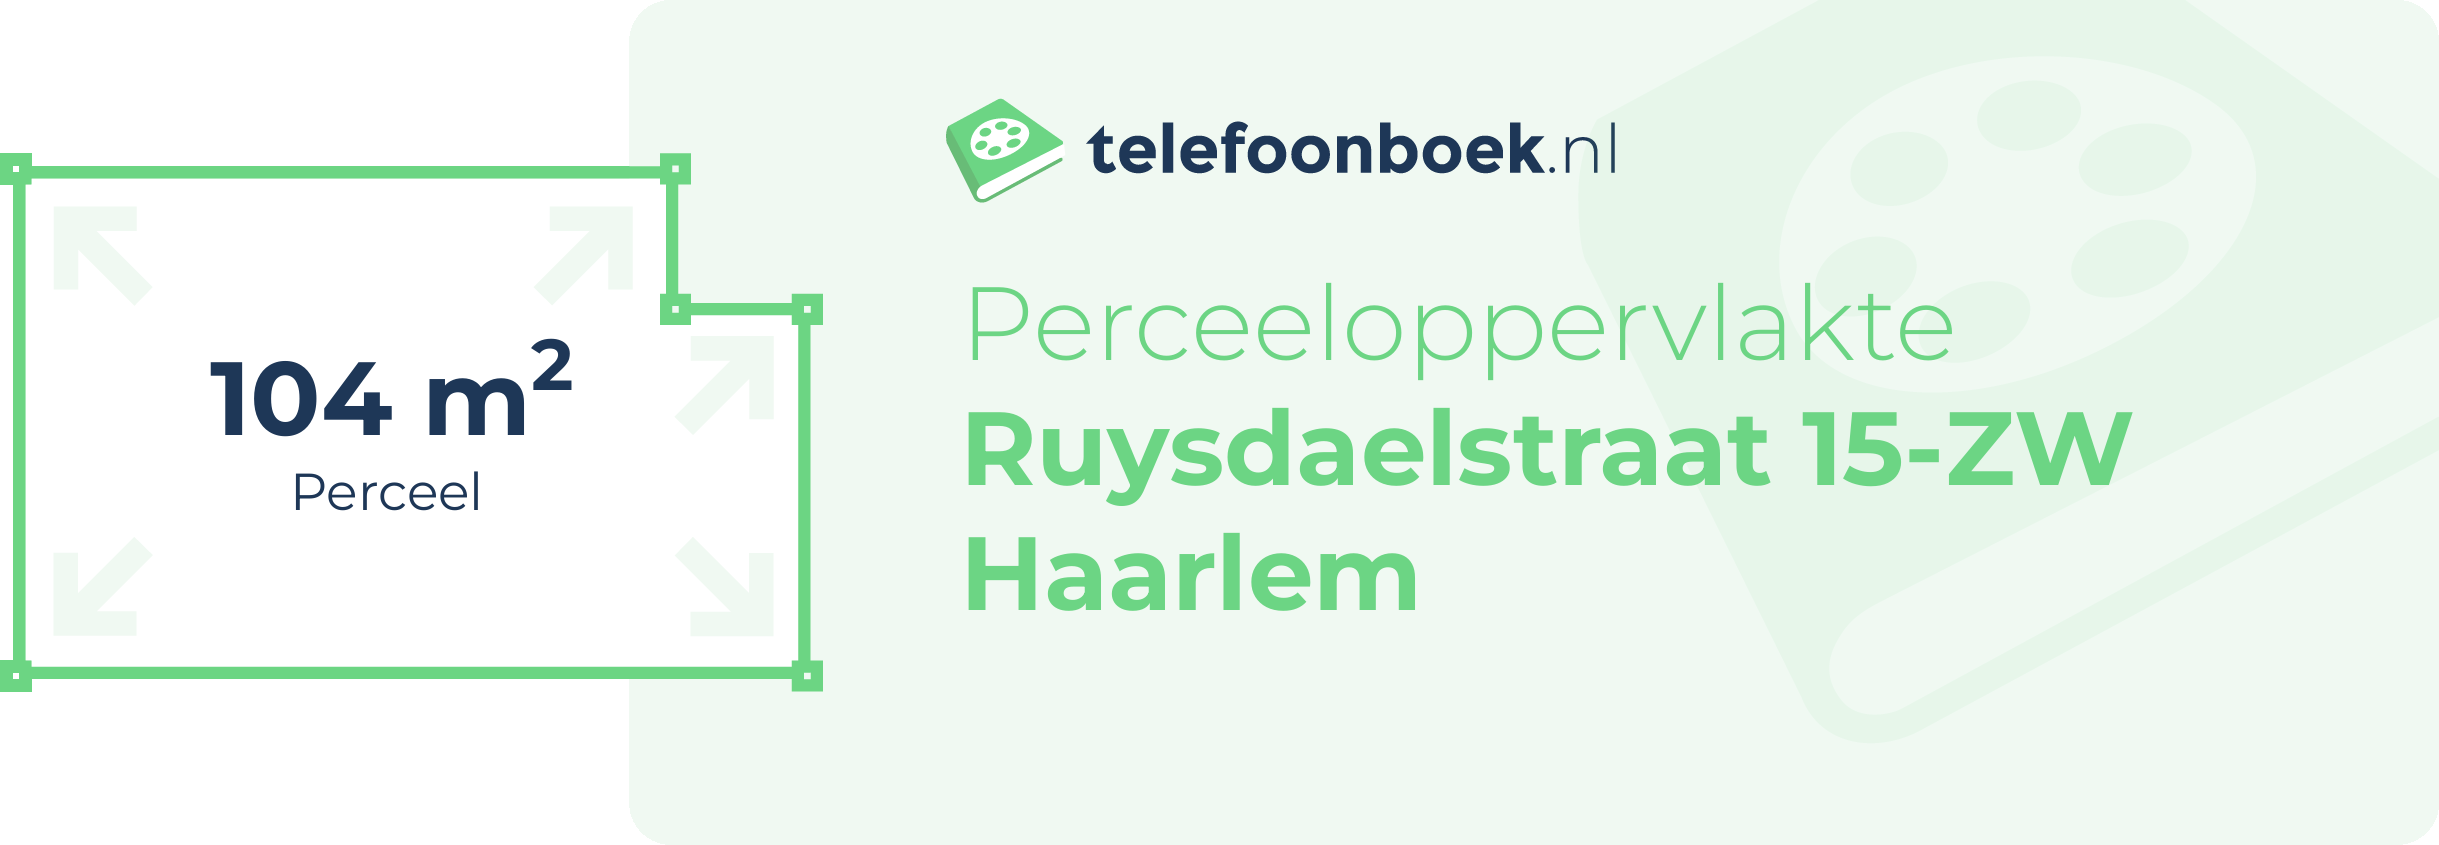 Perceeloppervlakte Ruysdaelstraat 15-ZW Haarlem